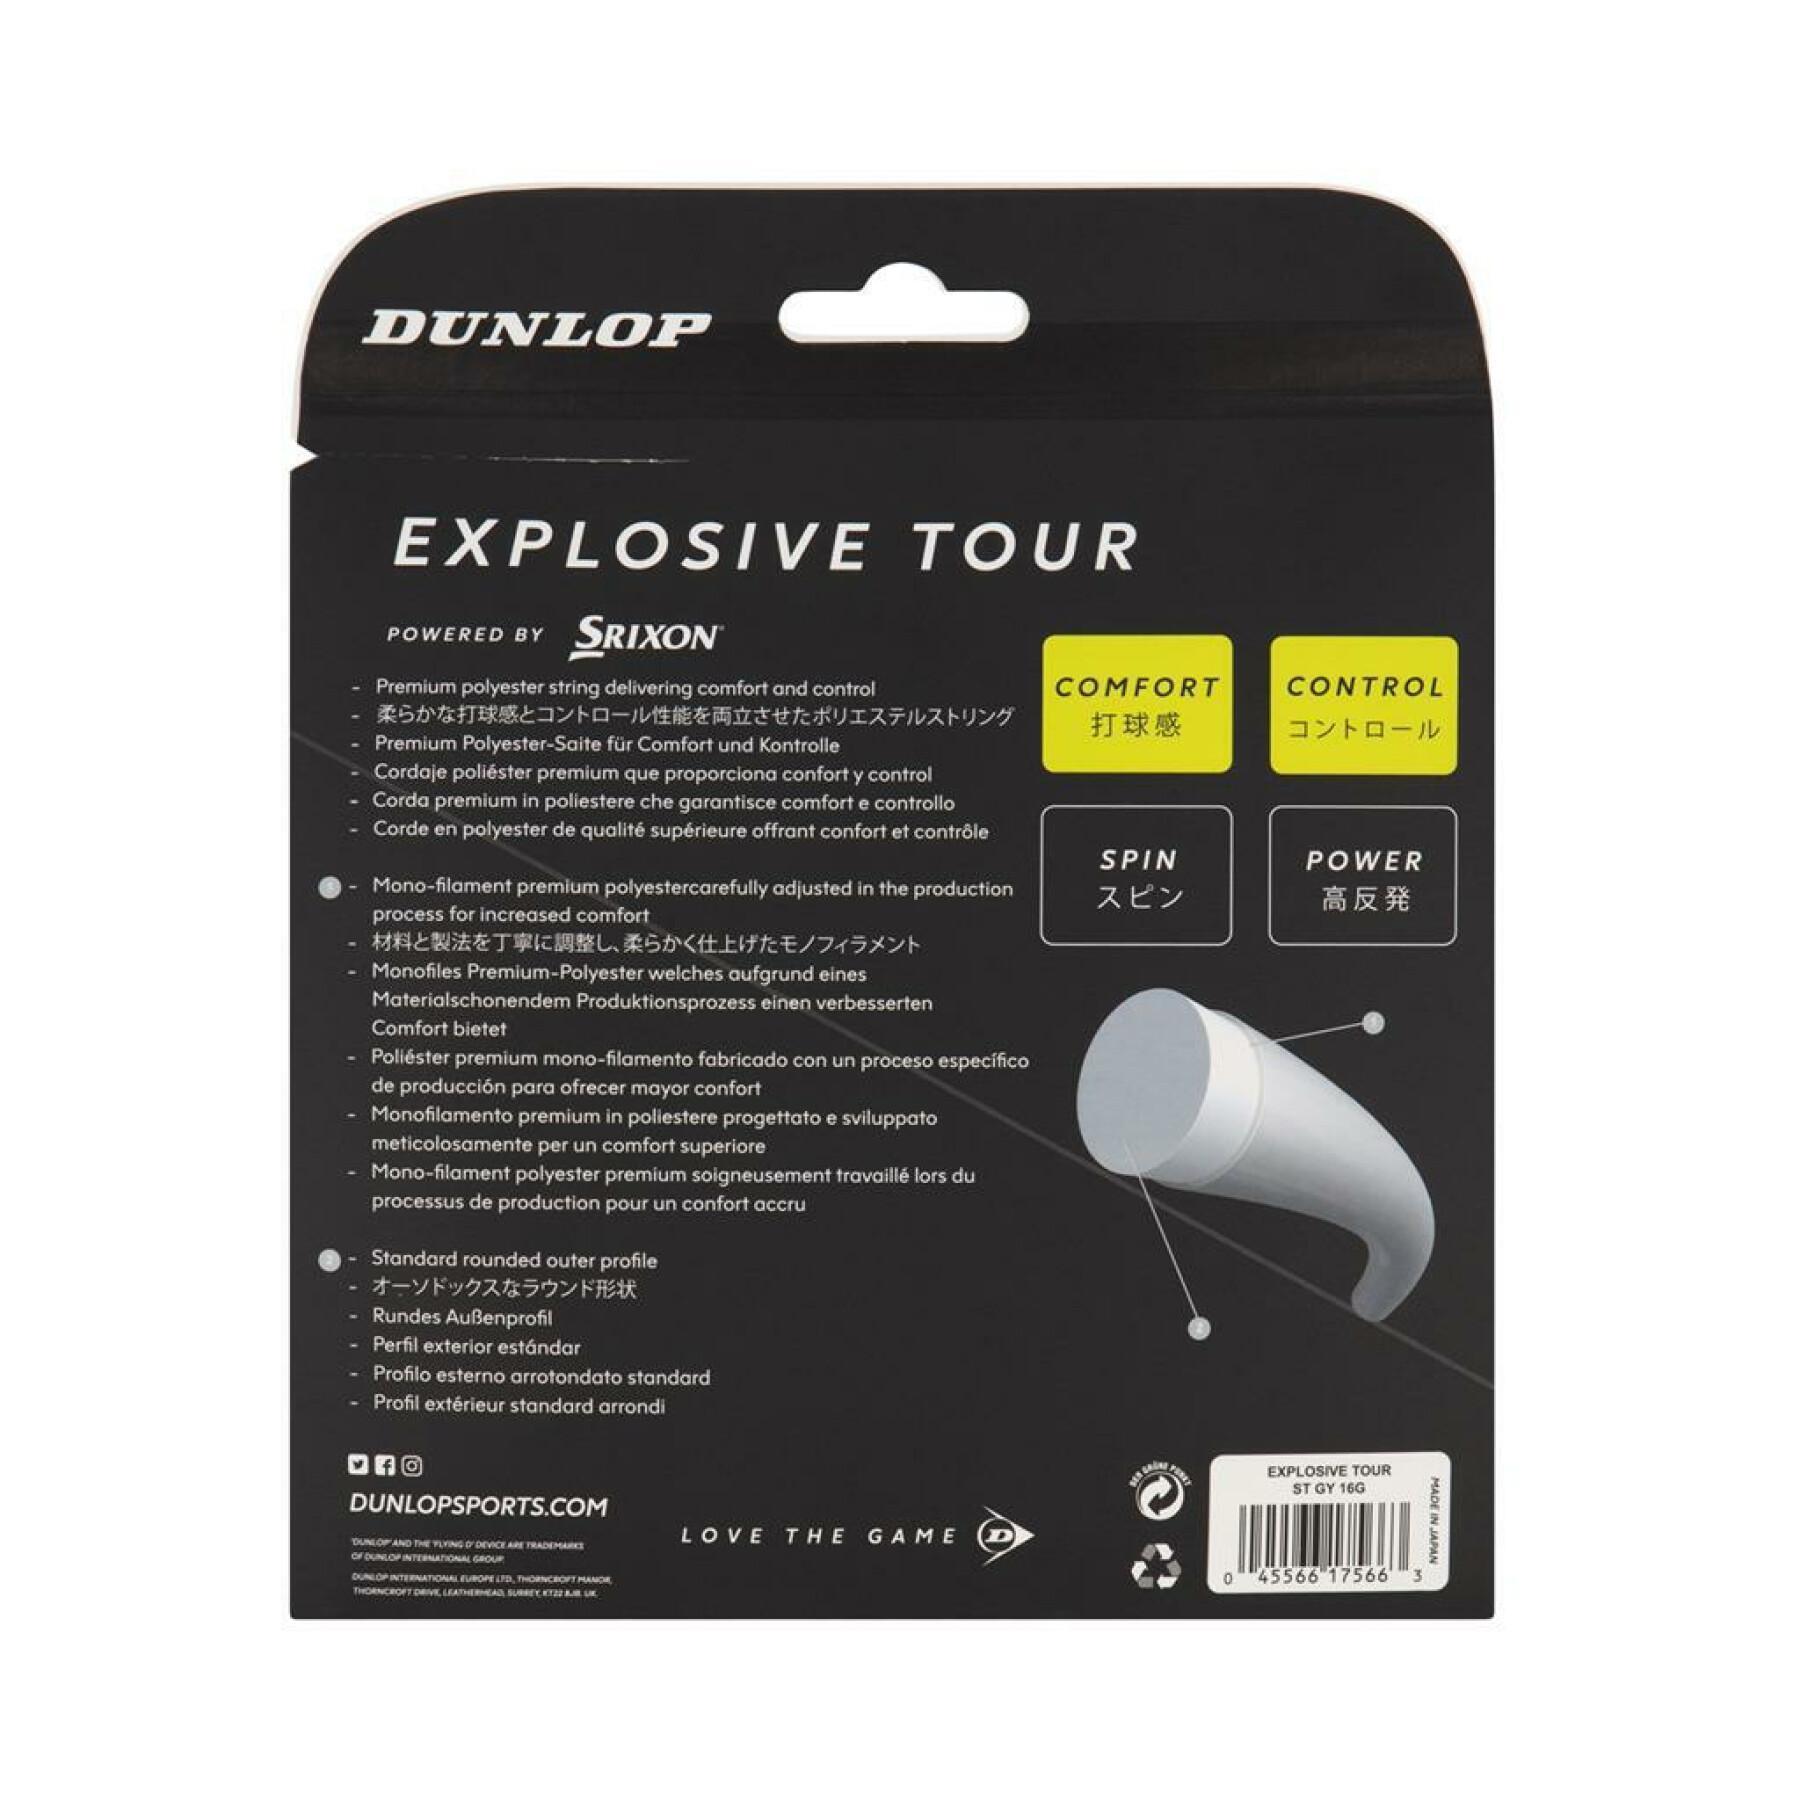 Corda Dunlop explosive tour